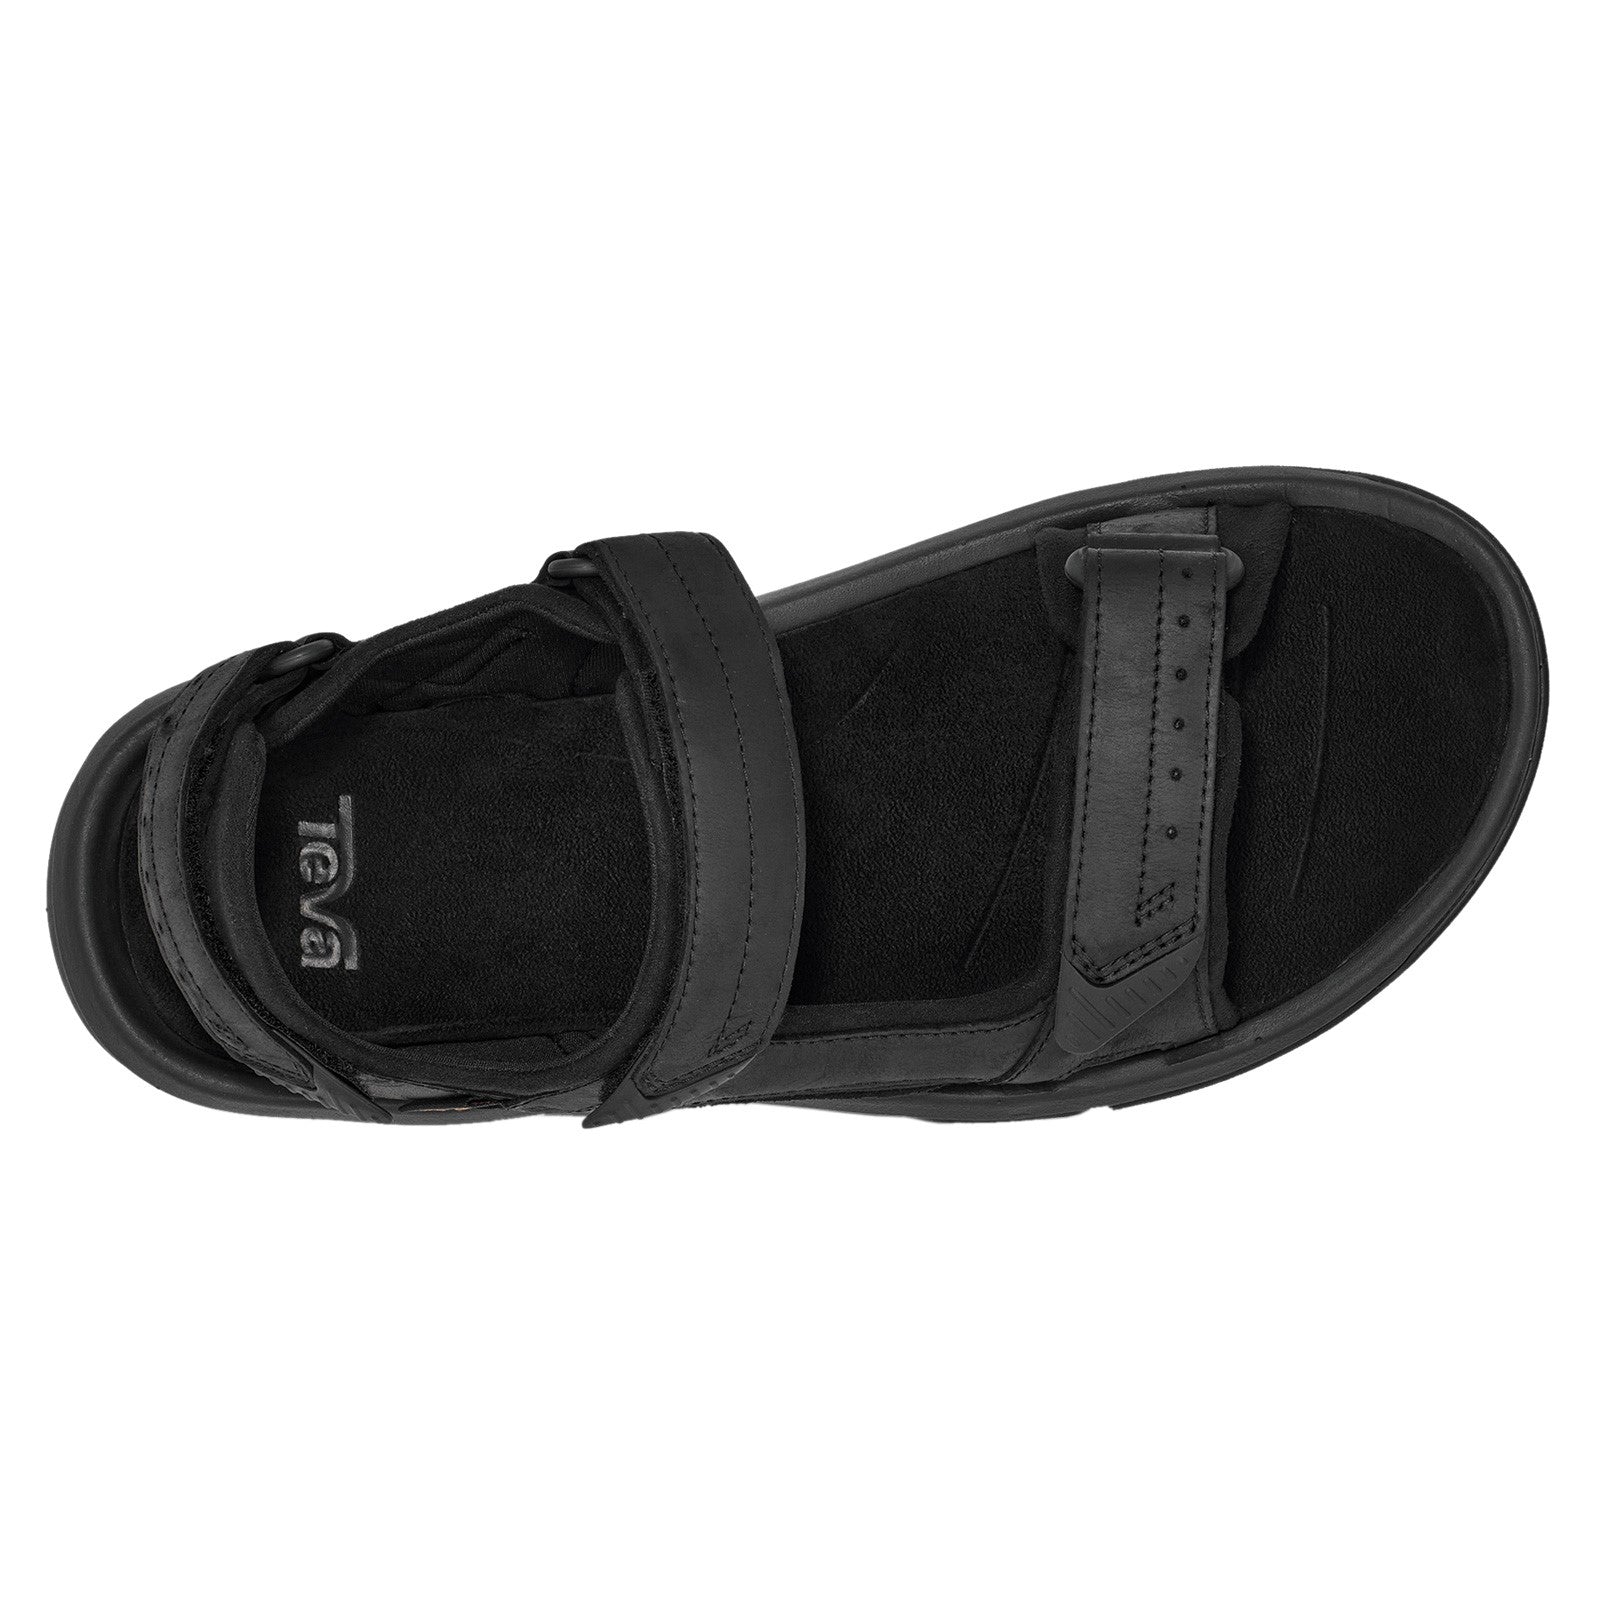 TEVA Outlet: Shoes men - Military | TEVA sandals 1121534 online at  GIGLIO.COM